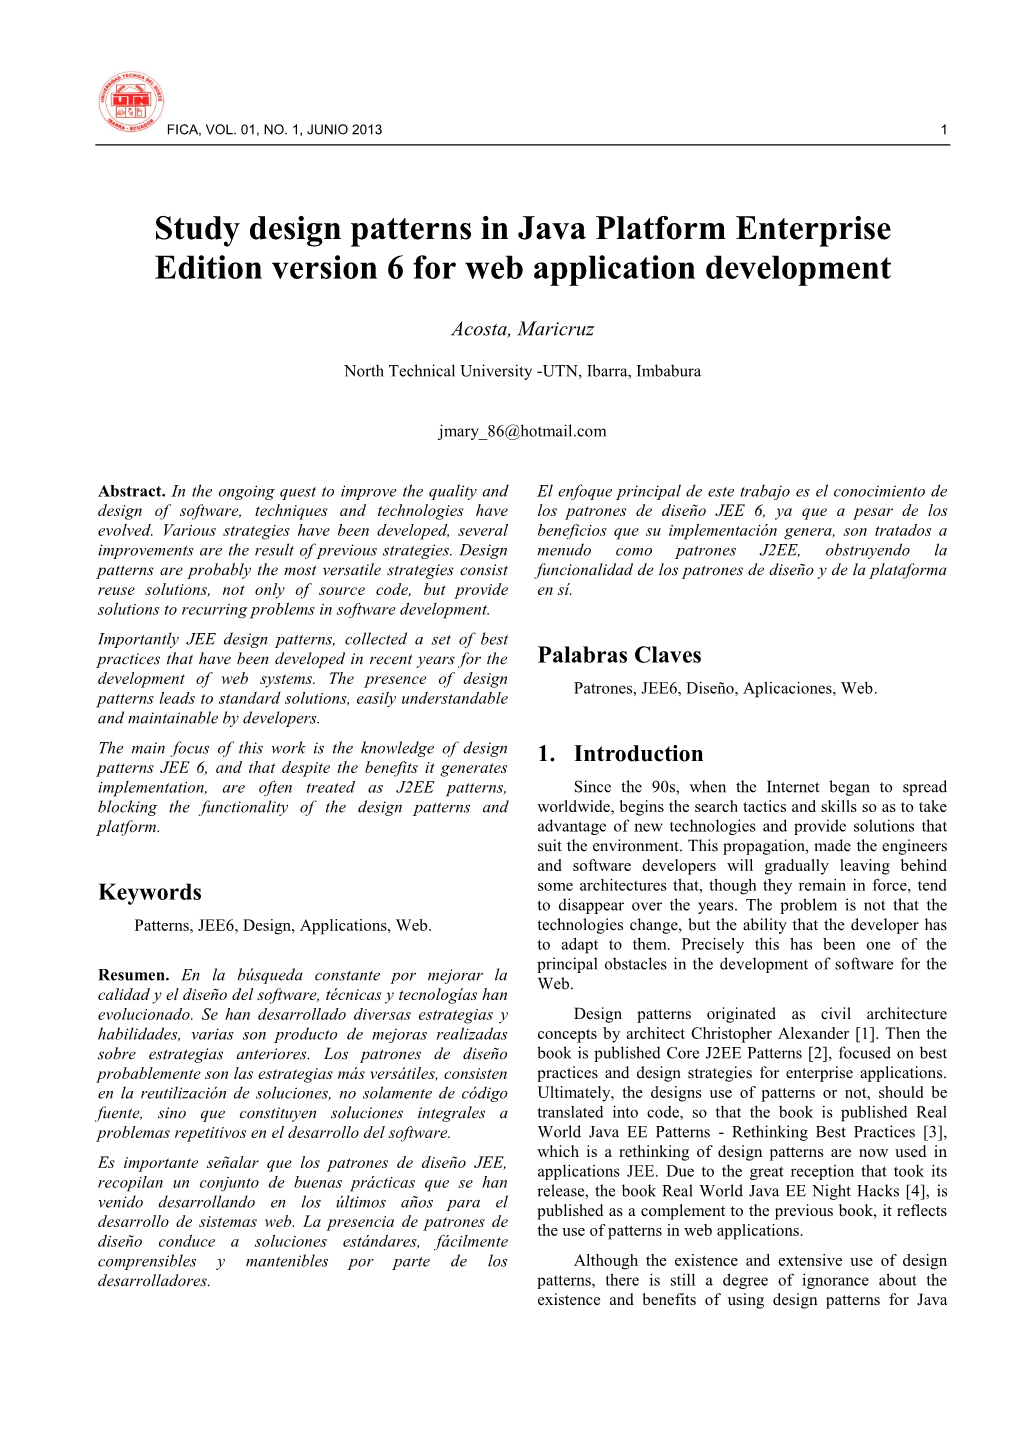 Study Design Patterns in Java Platform Enterprise Edition Version 6 for Web Application Development